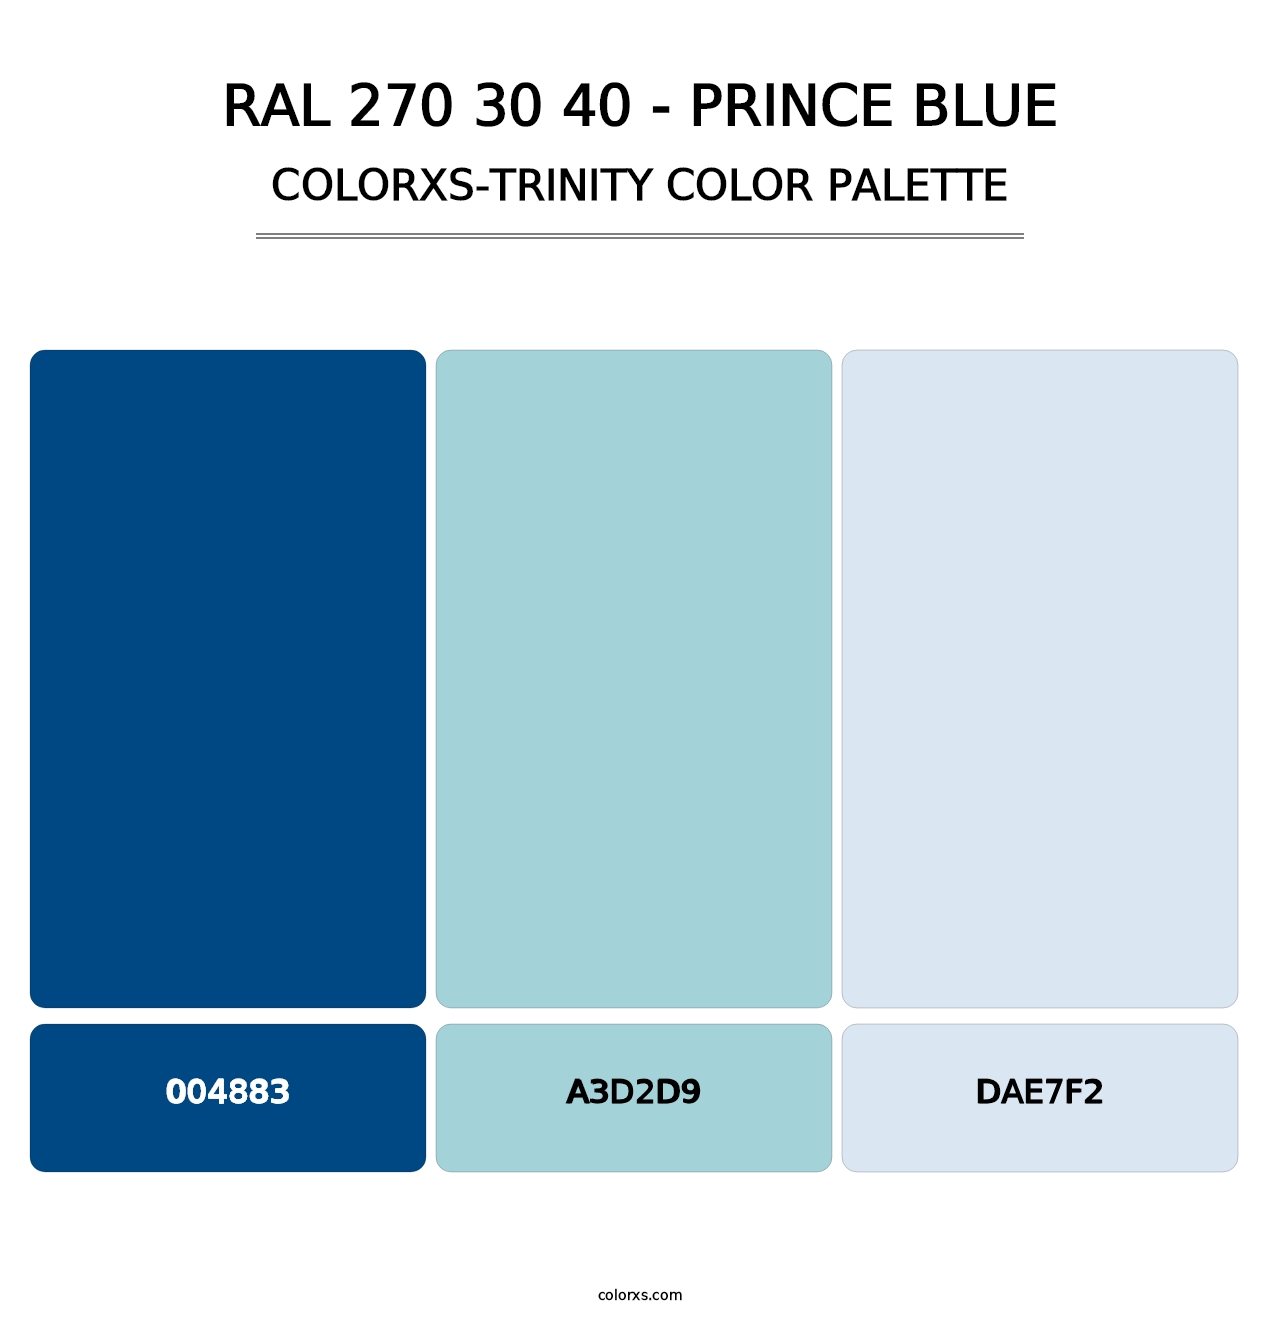 RAL 270 30 40 - Prince Blue - Colorxs Trinity Palette